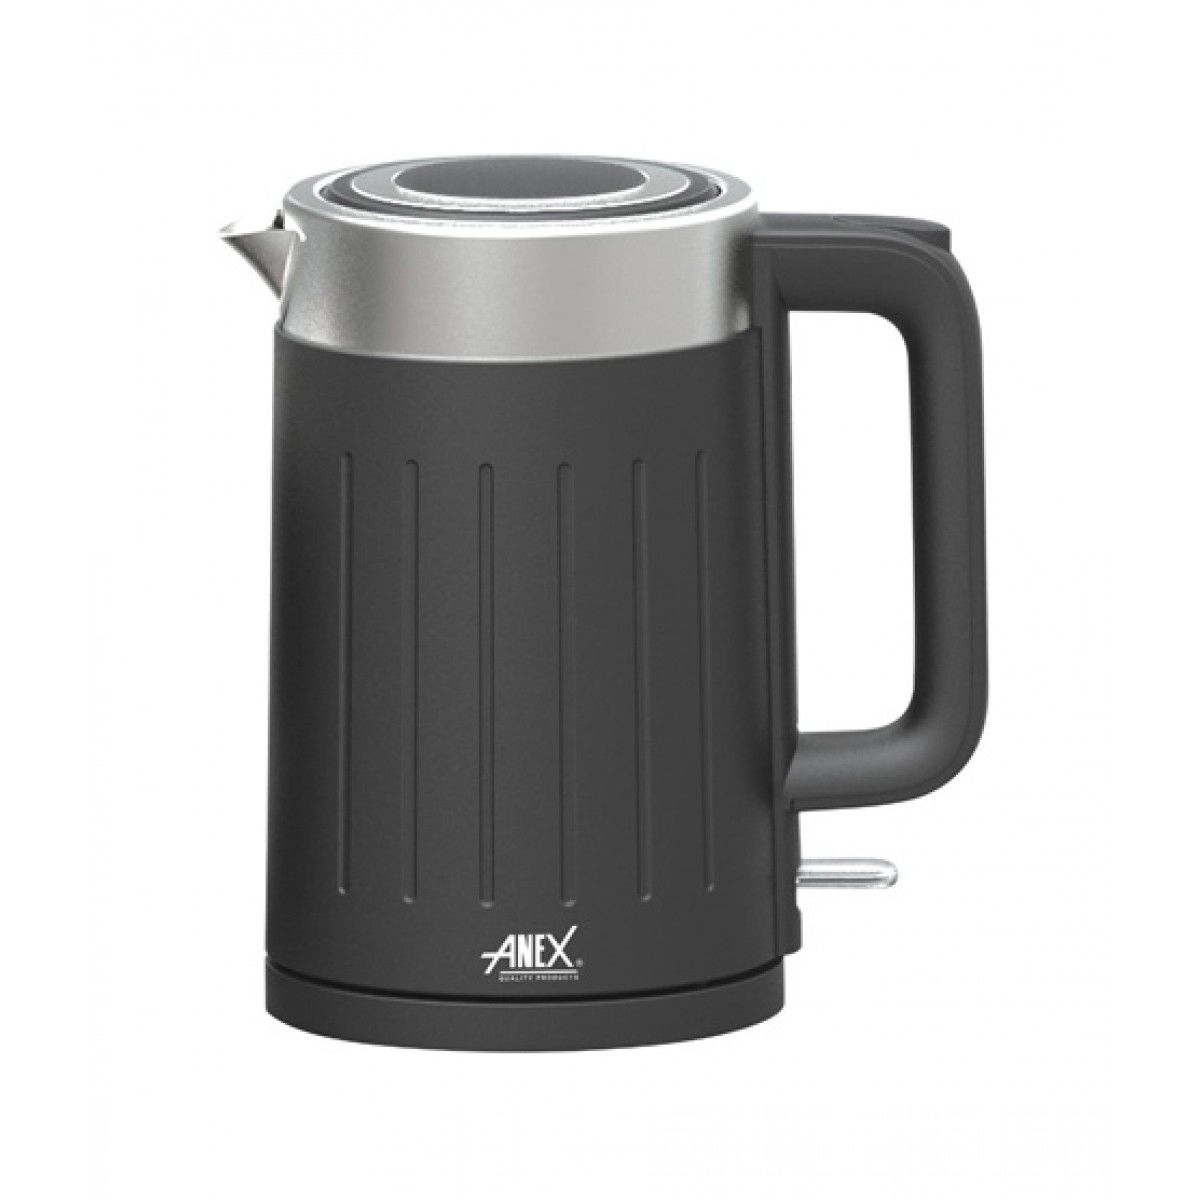 Anex Kitchen Appliances Kettle - AG-4049